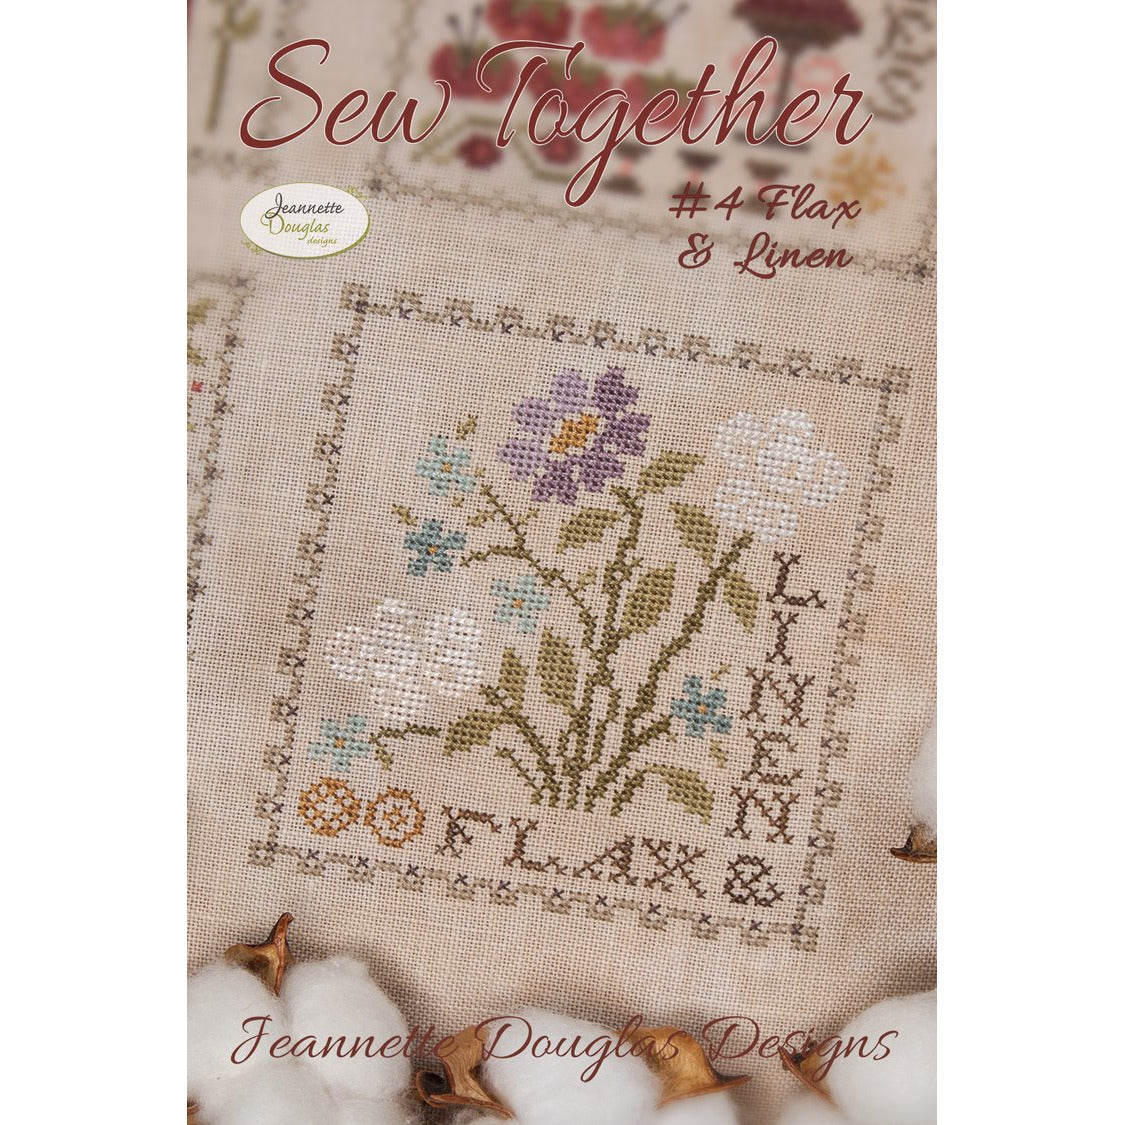 Jeannette Douglas Designs | Sew Together #4 Flax & Linen Pattern